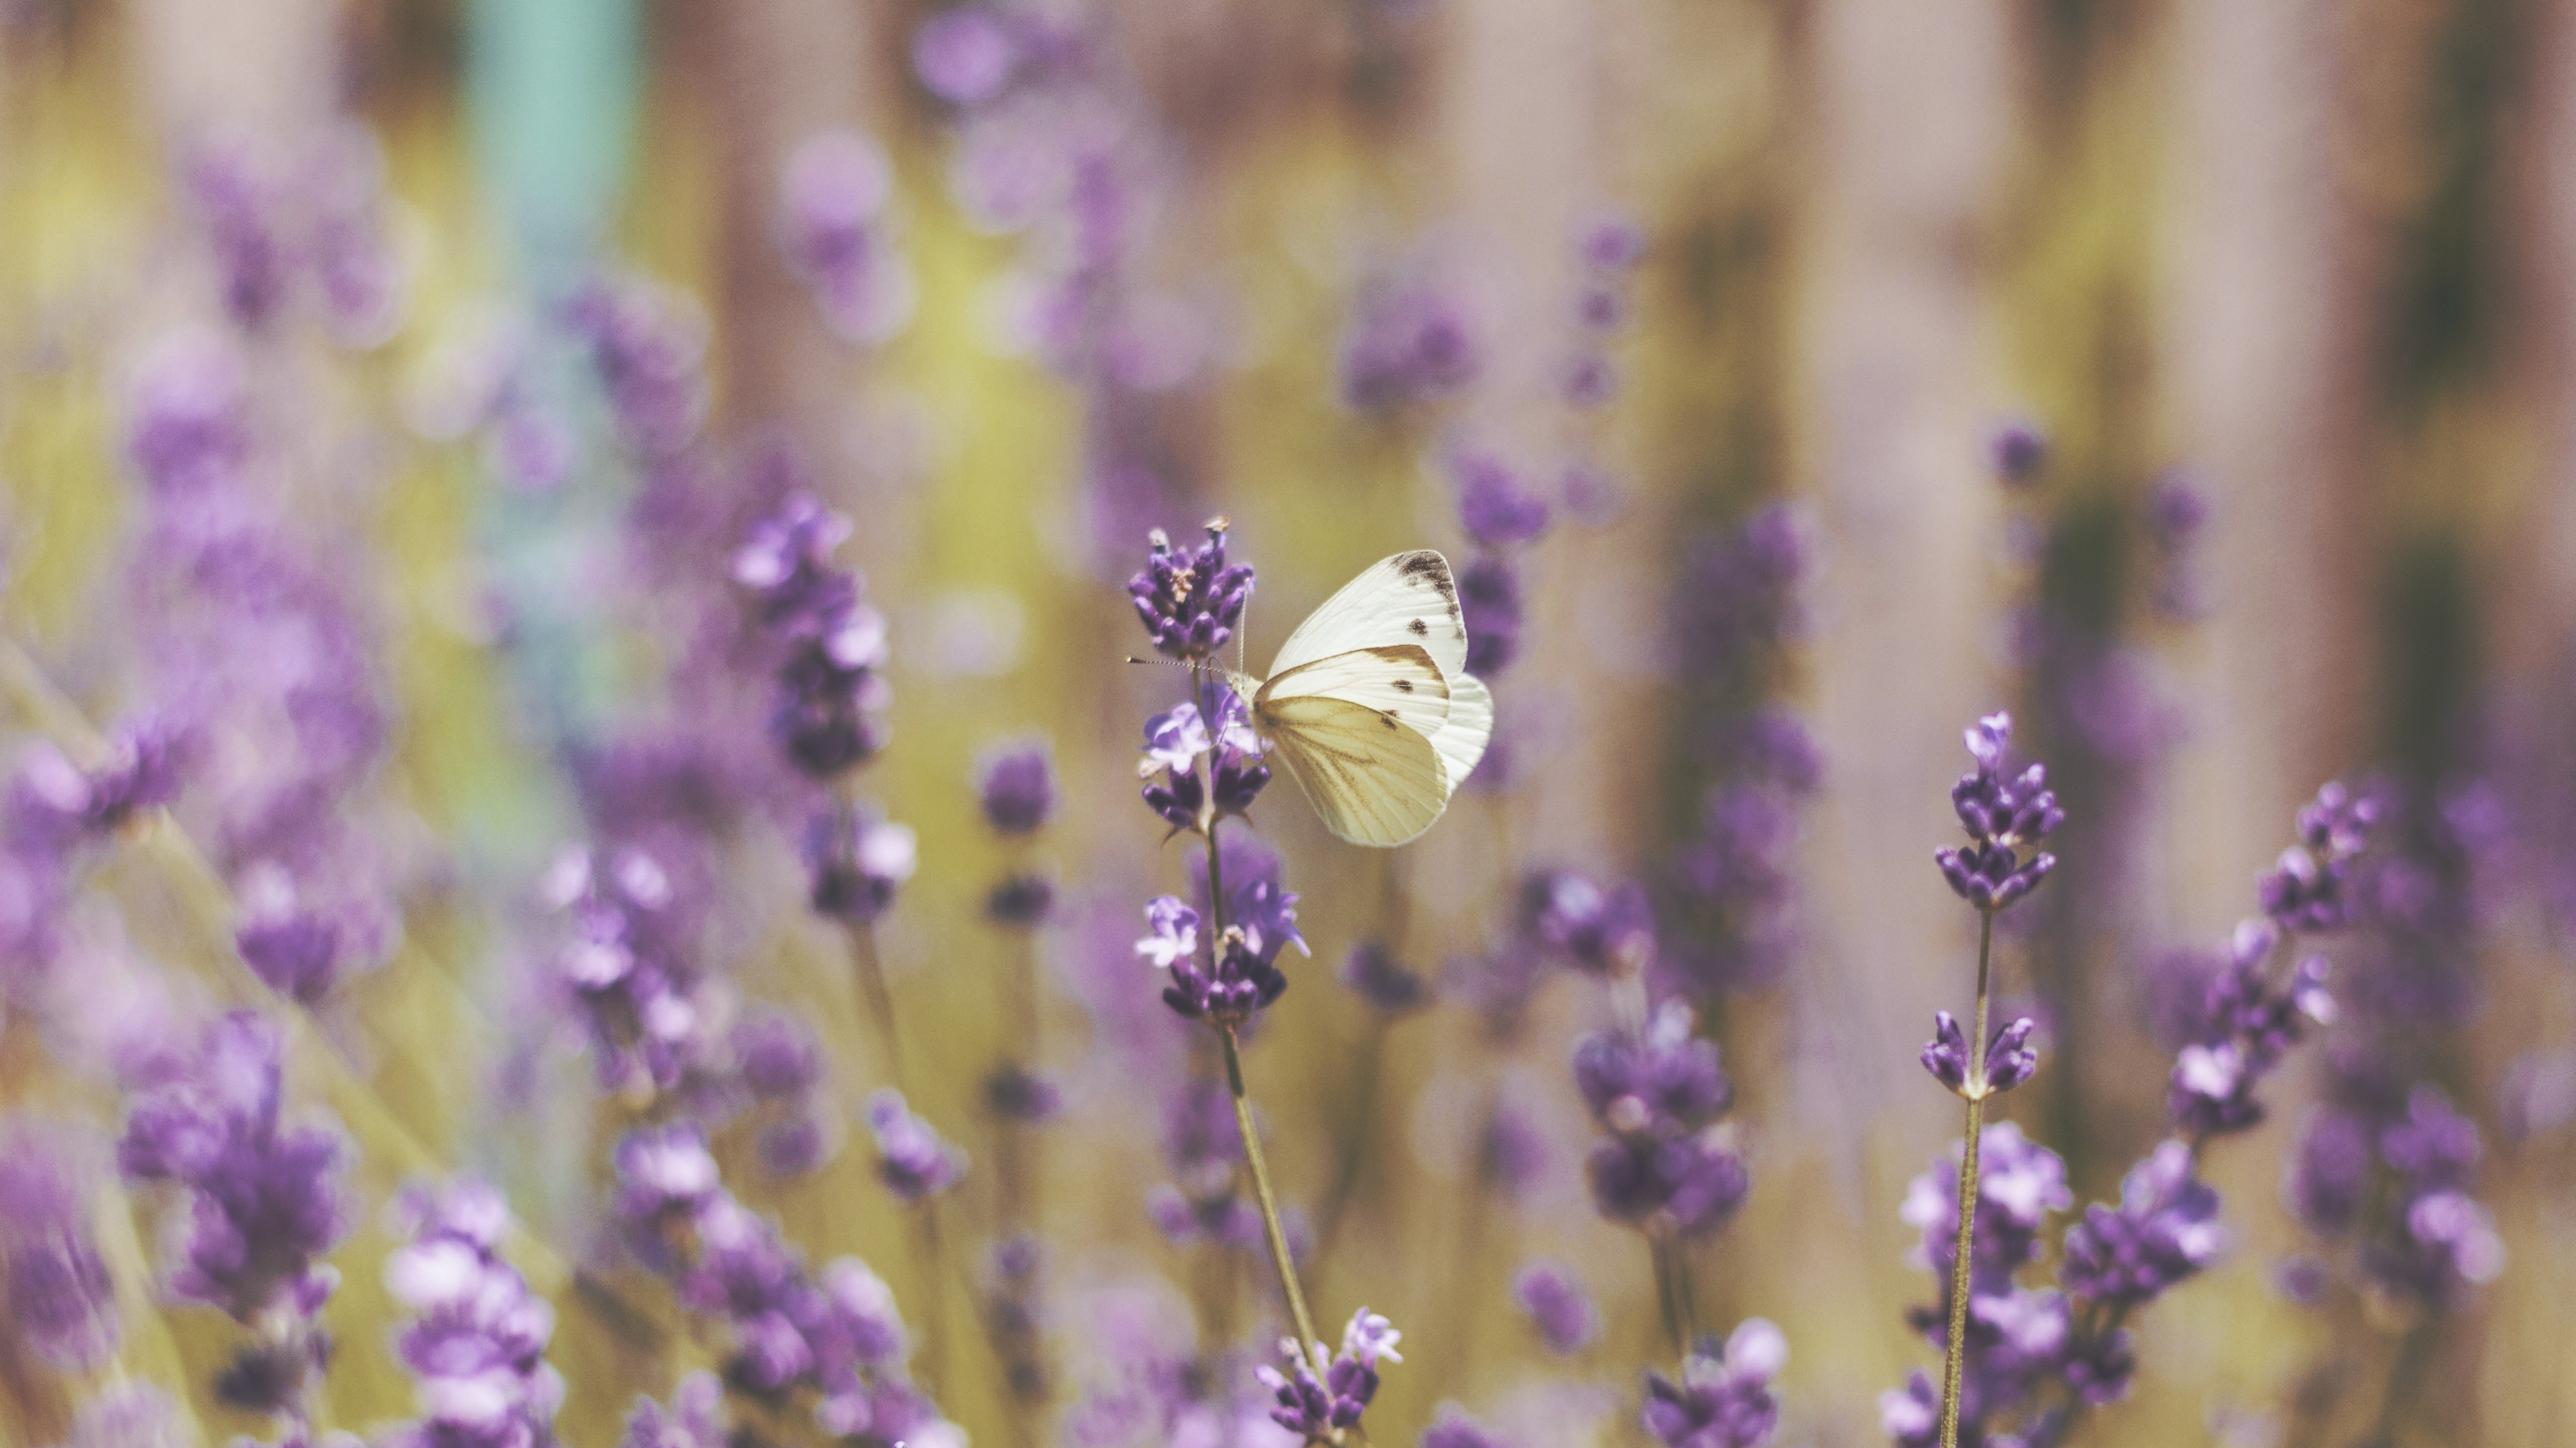 Cute White Butterfly on Lavender Flowers 5K Wallpaper